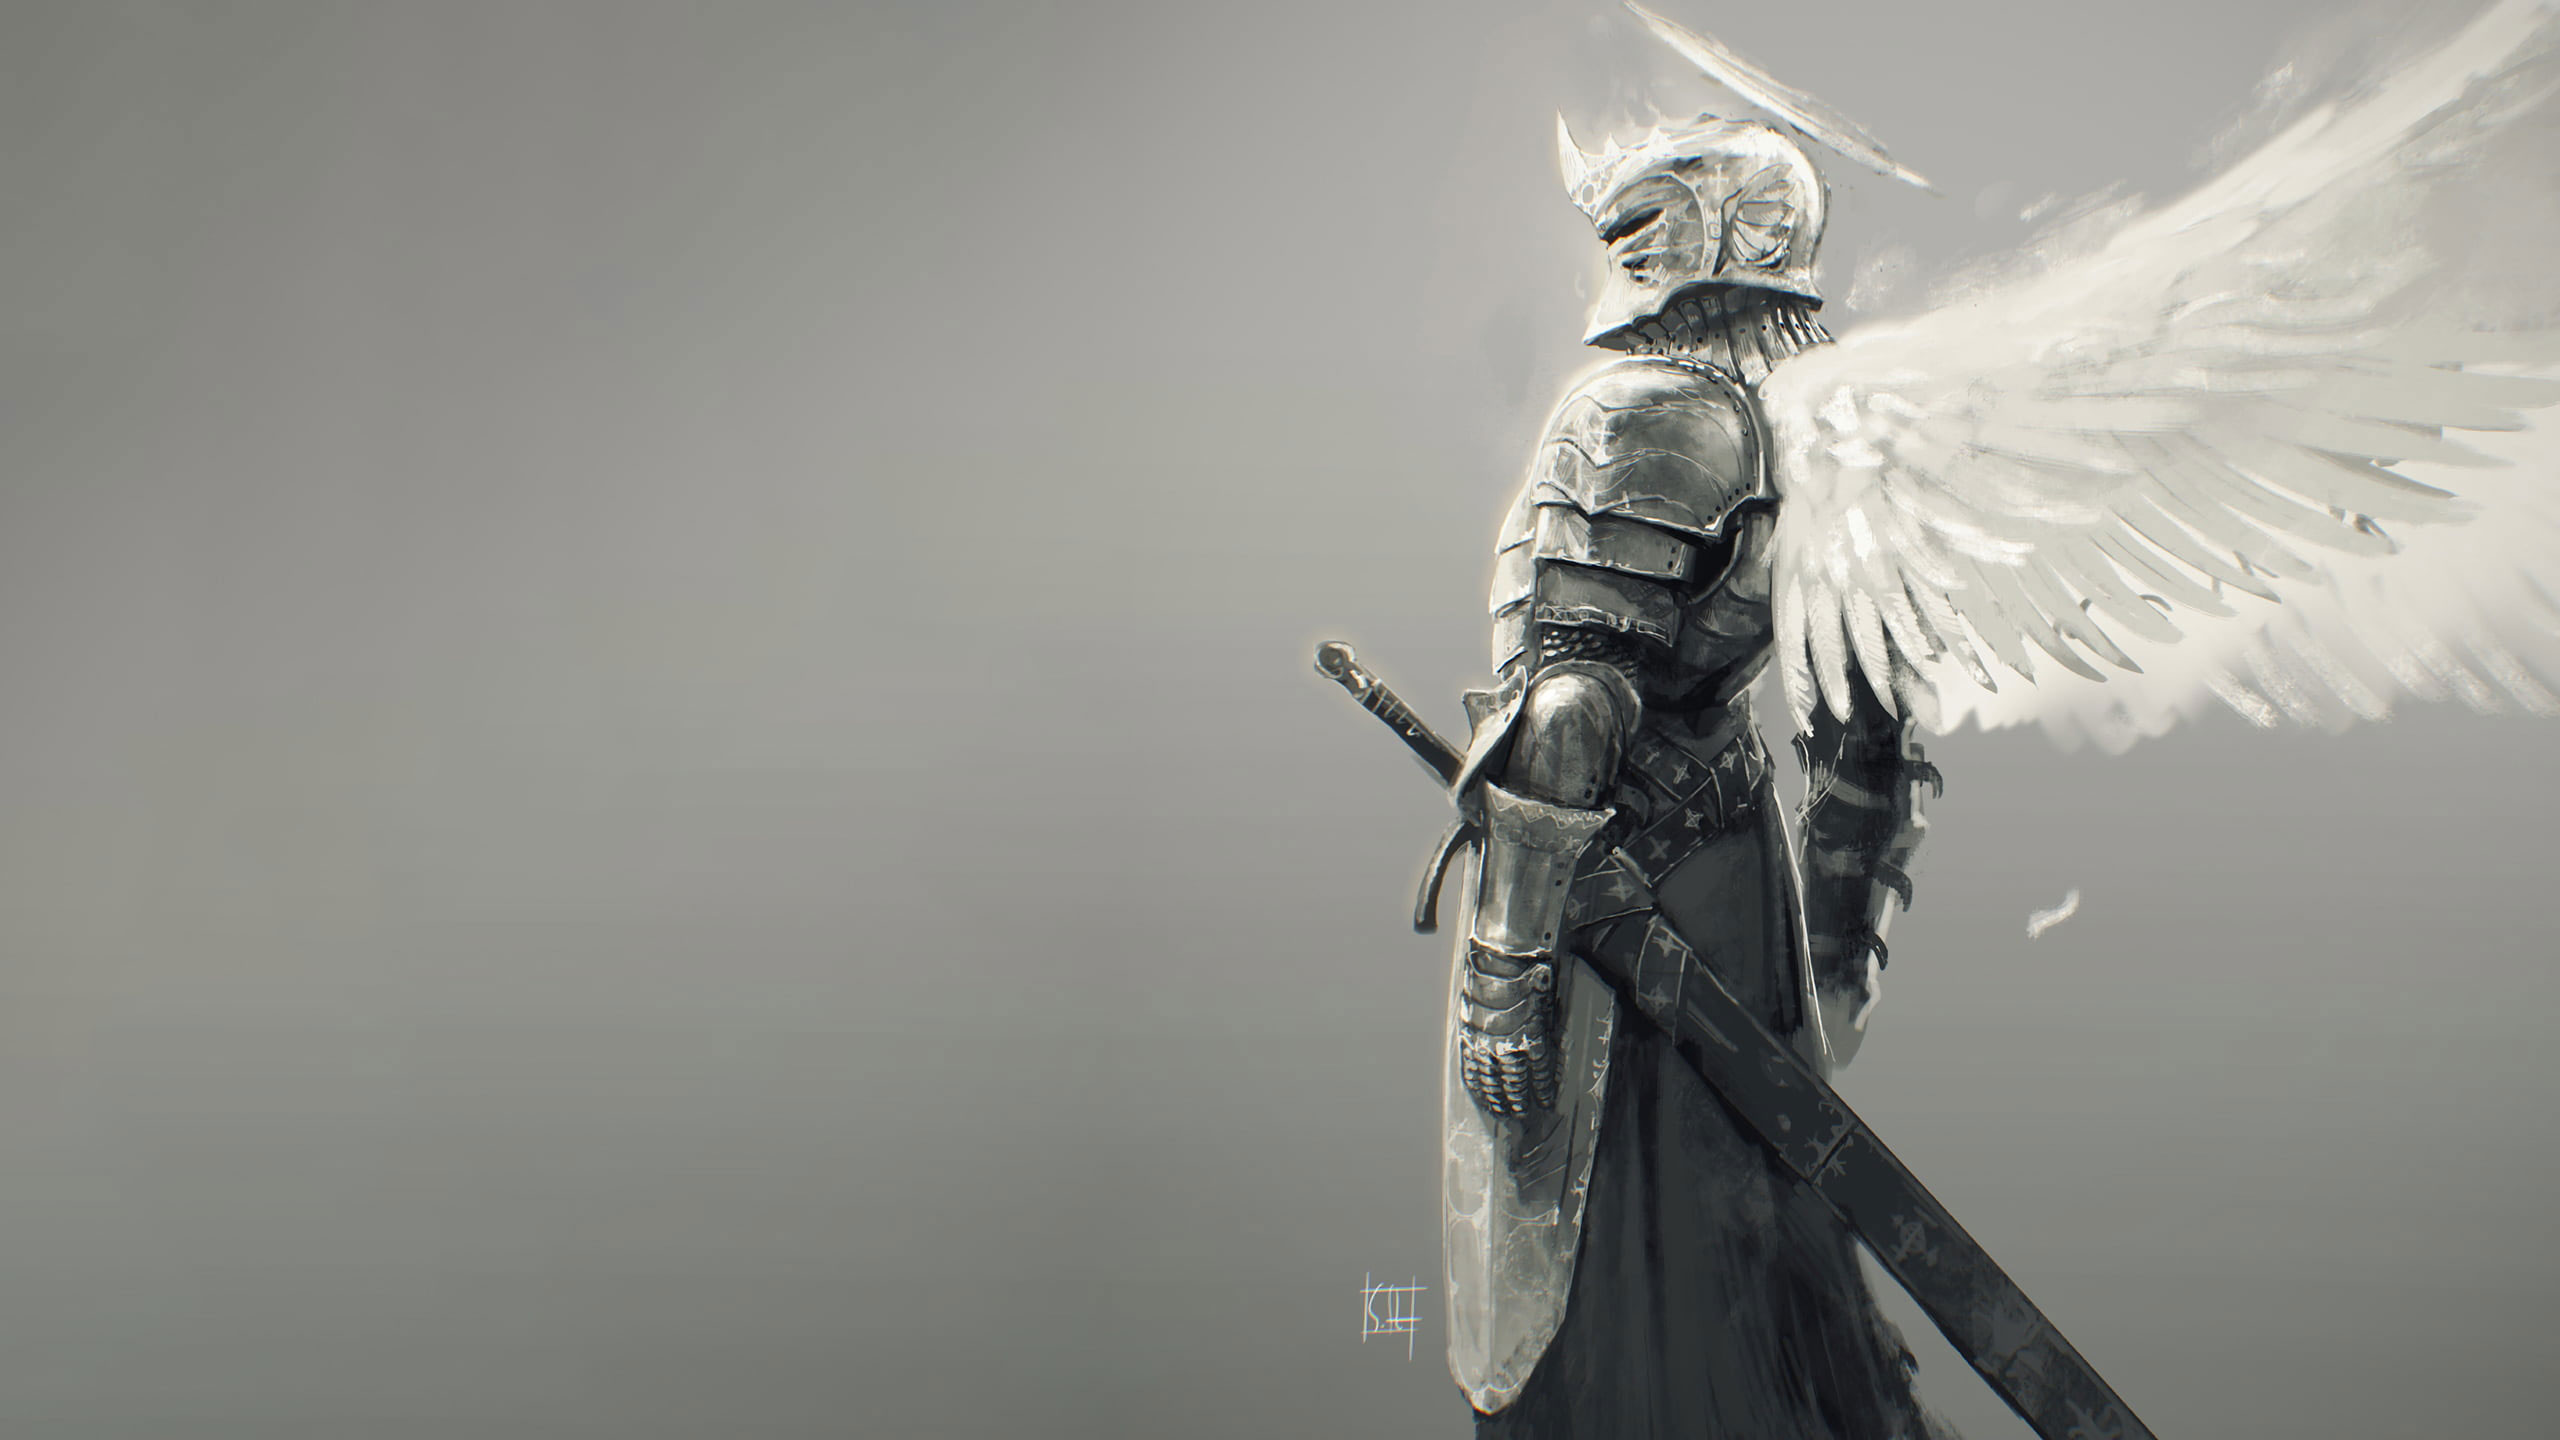 Wallpaper Person With Sword Illustration, Fantasy Armor